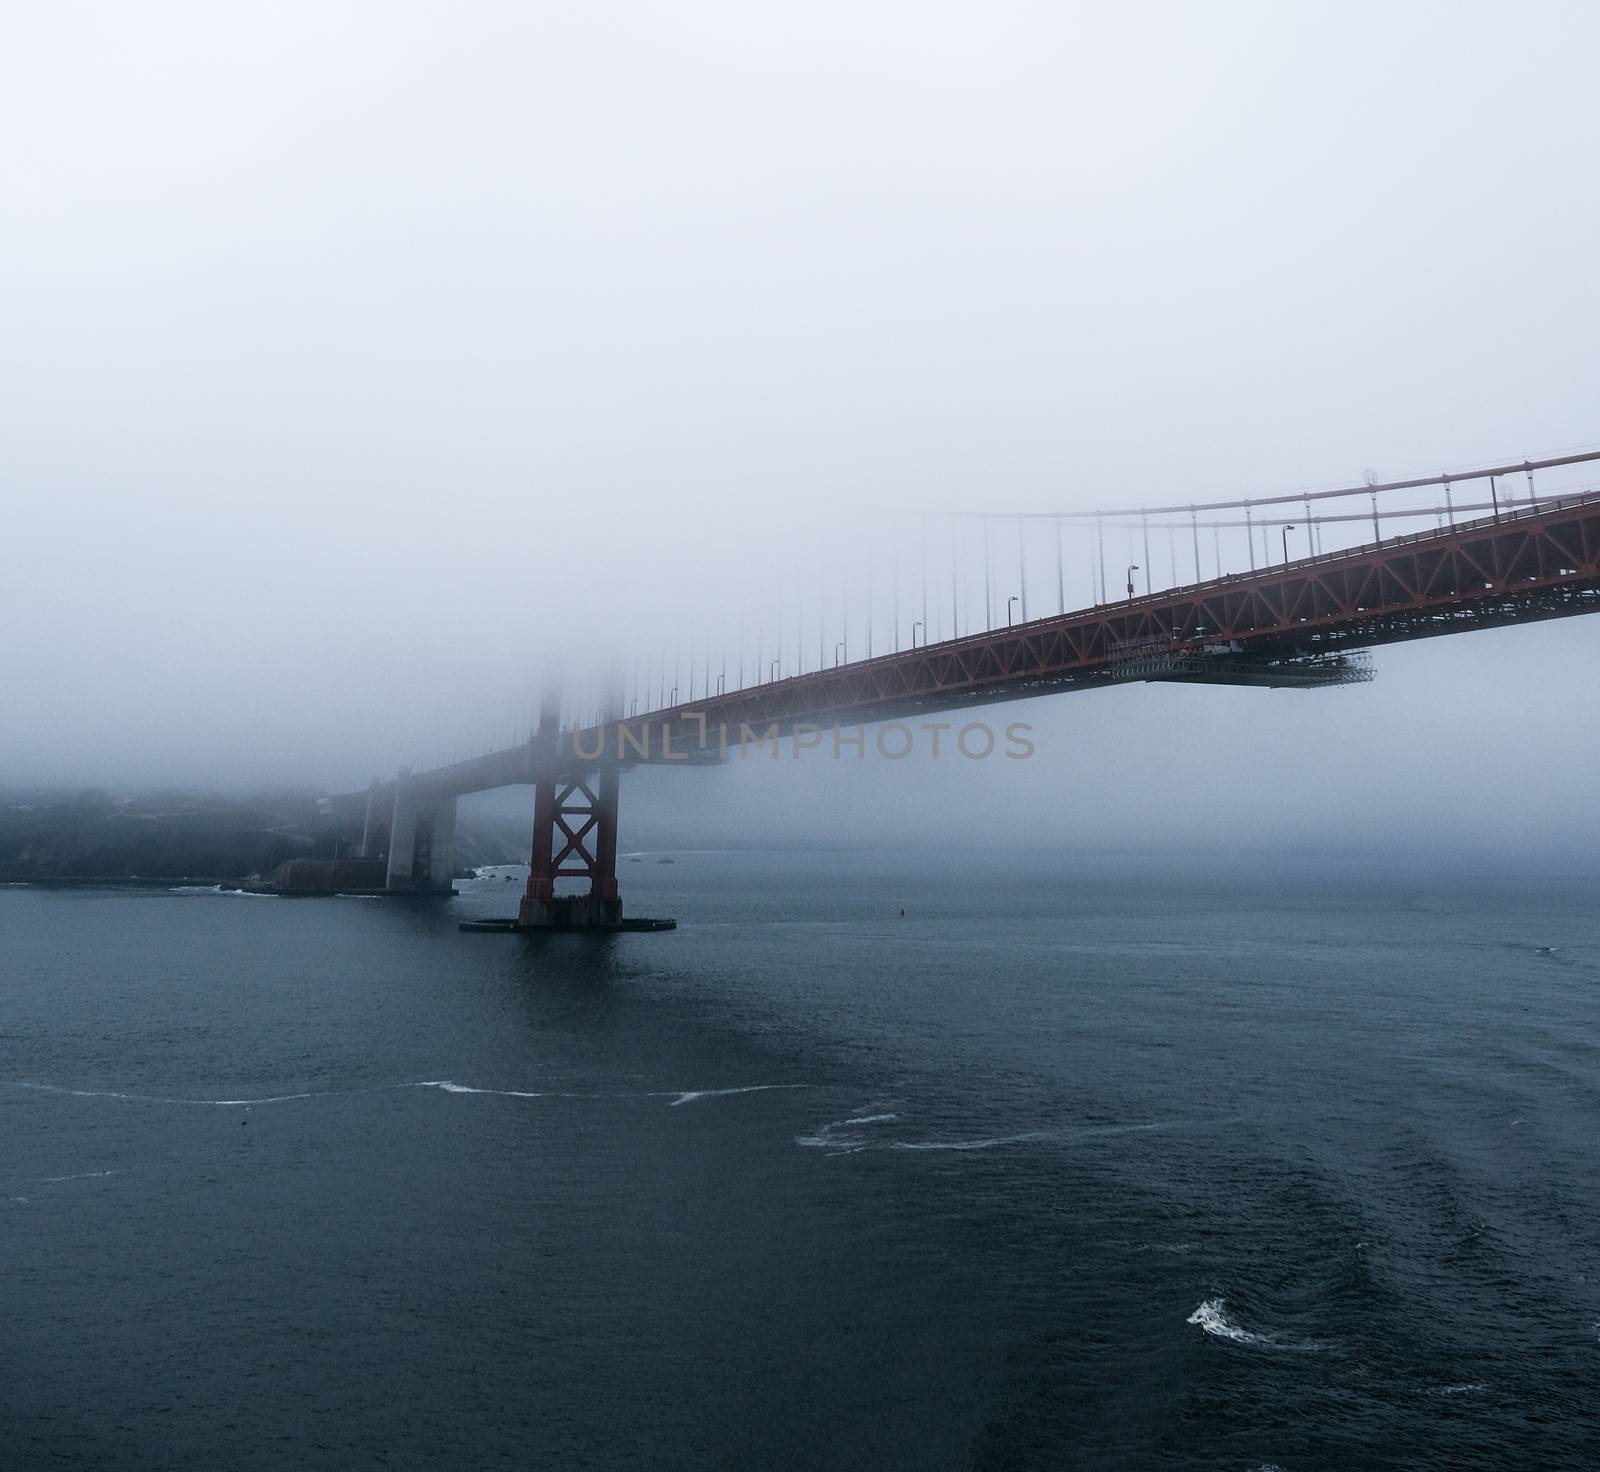 Golden Gate Rising From Fog by dbvirago